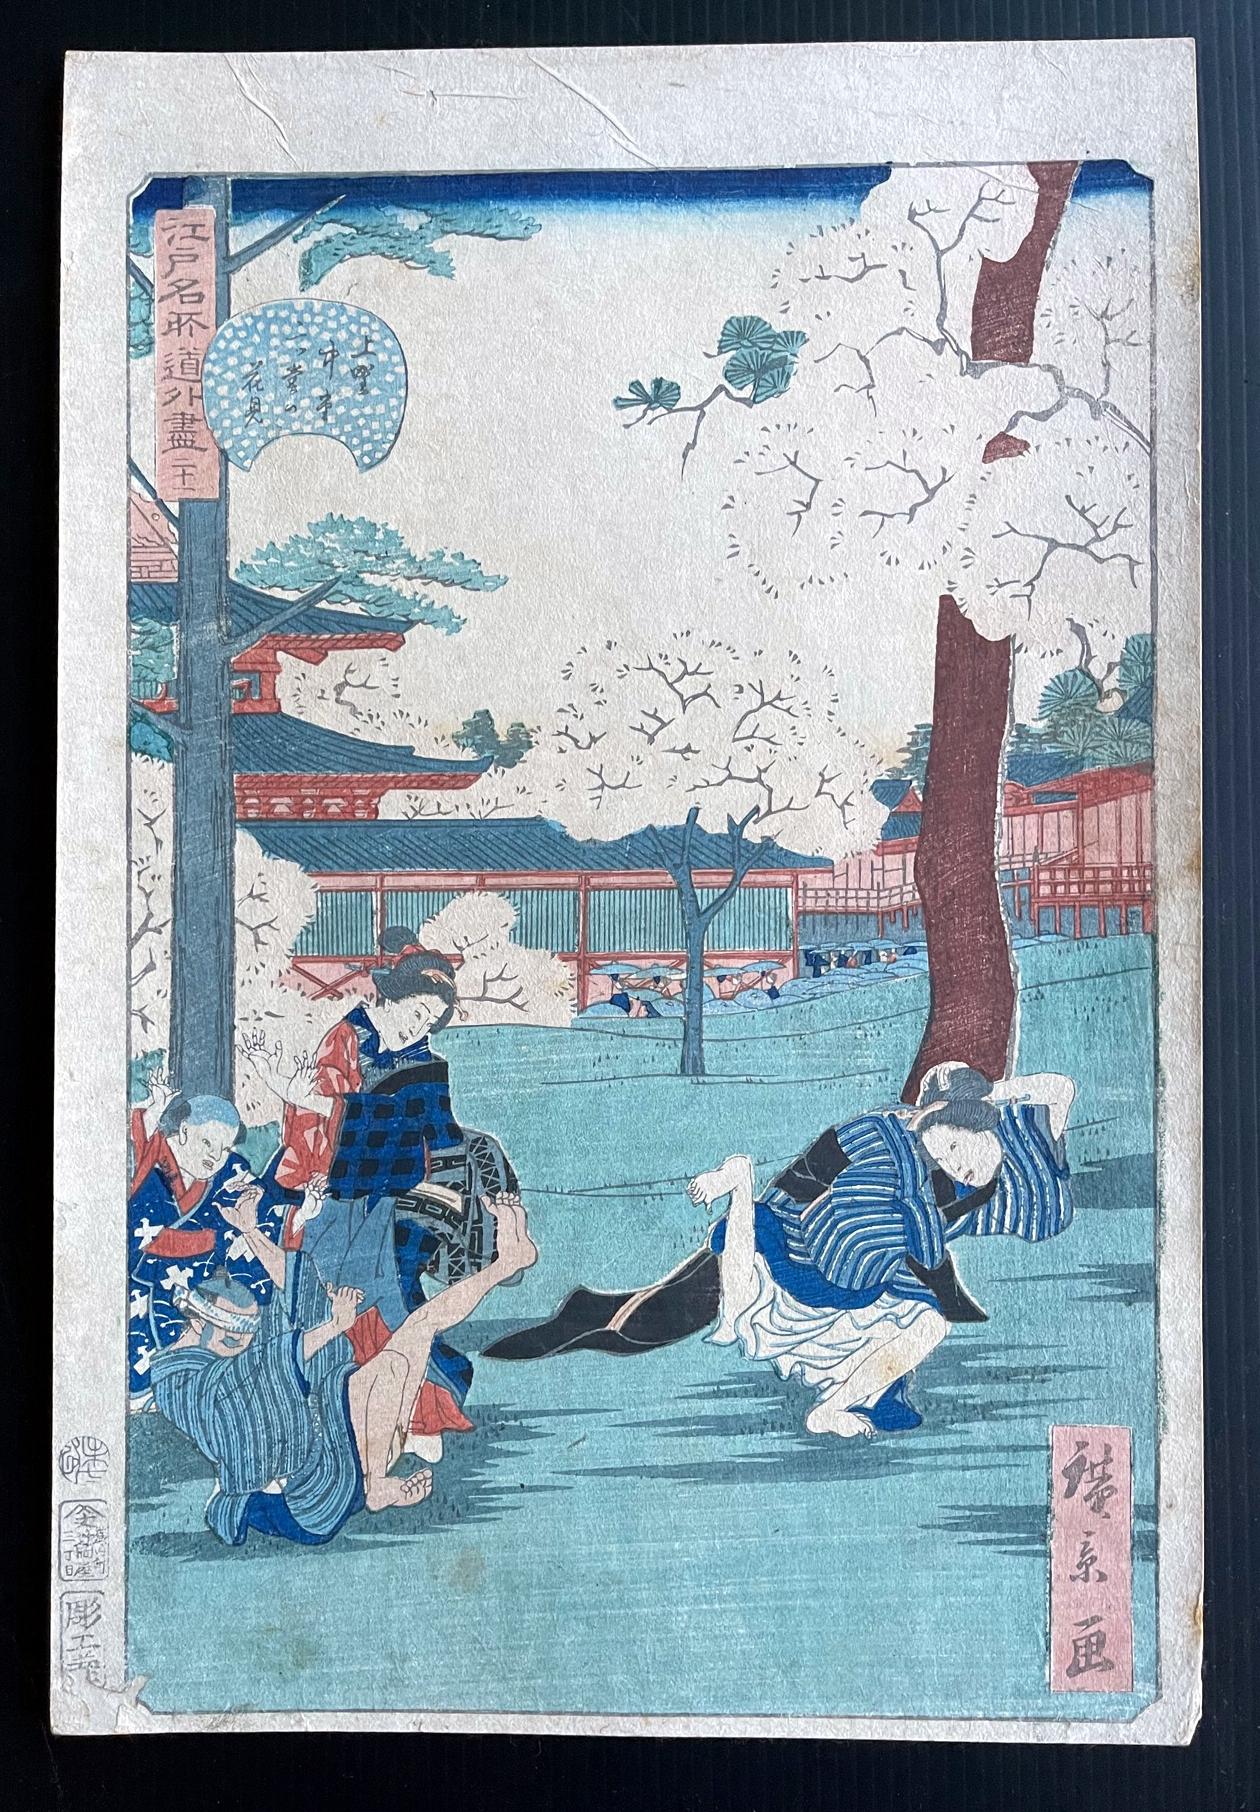 Künstler: Utagawa Hirokage (tätig 1855-1865)
Serie: Komische Ansichten berühmter Orte in Edo
Nummer: 21 